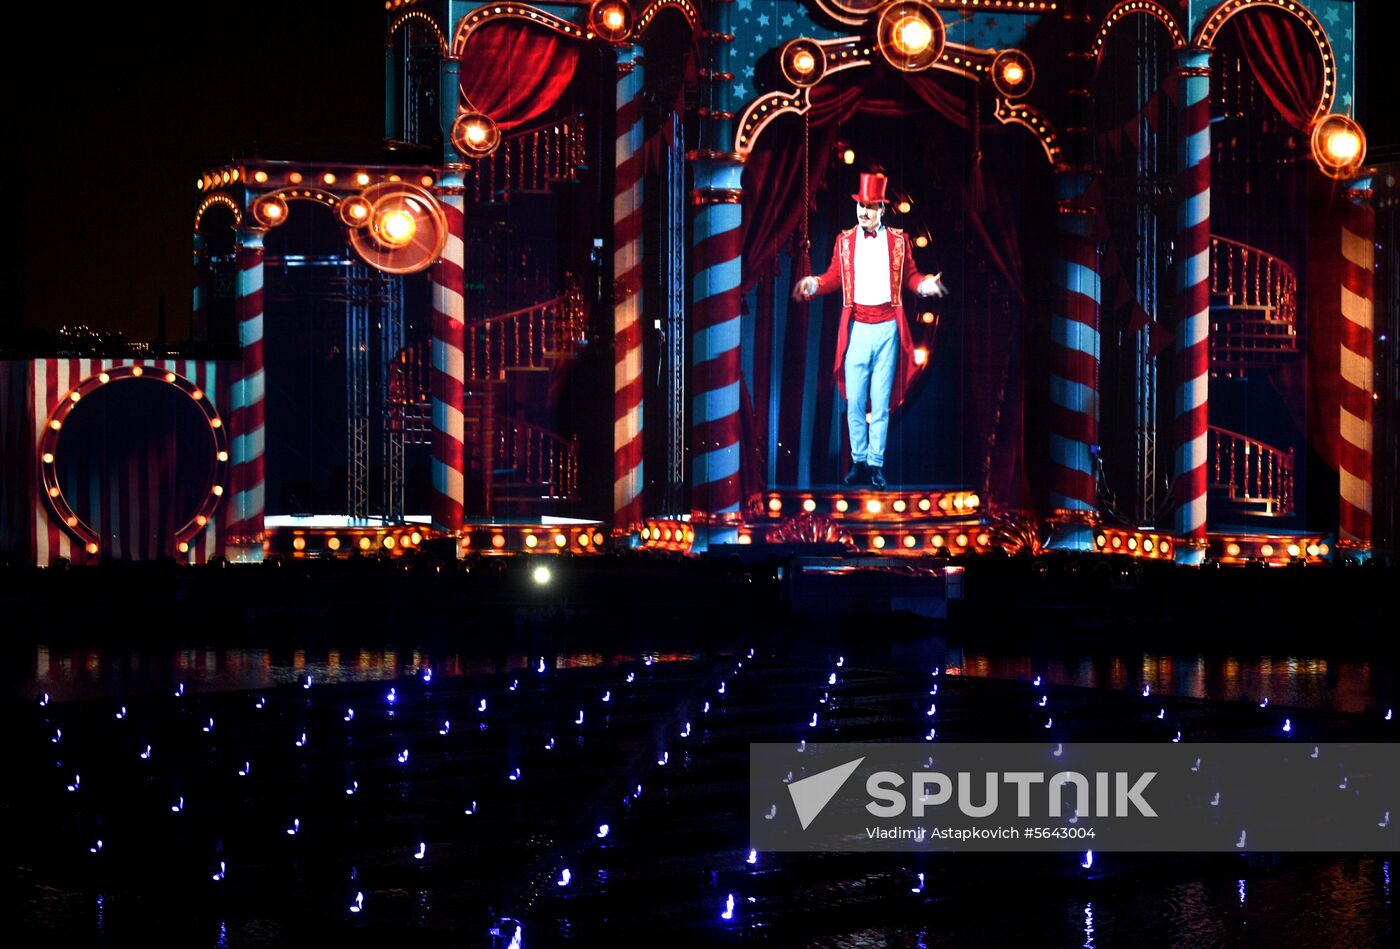 Russia Lights Festival